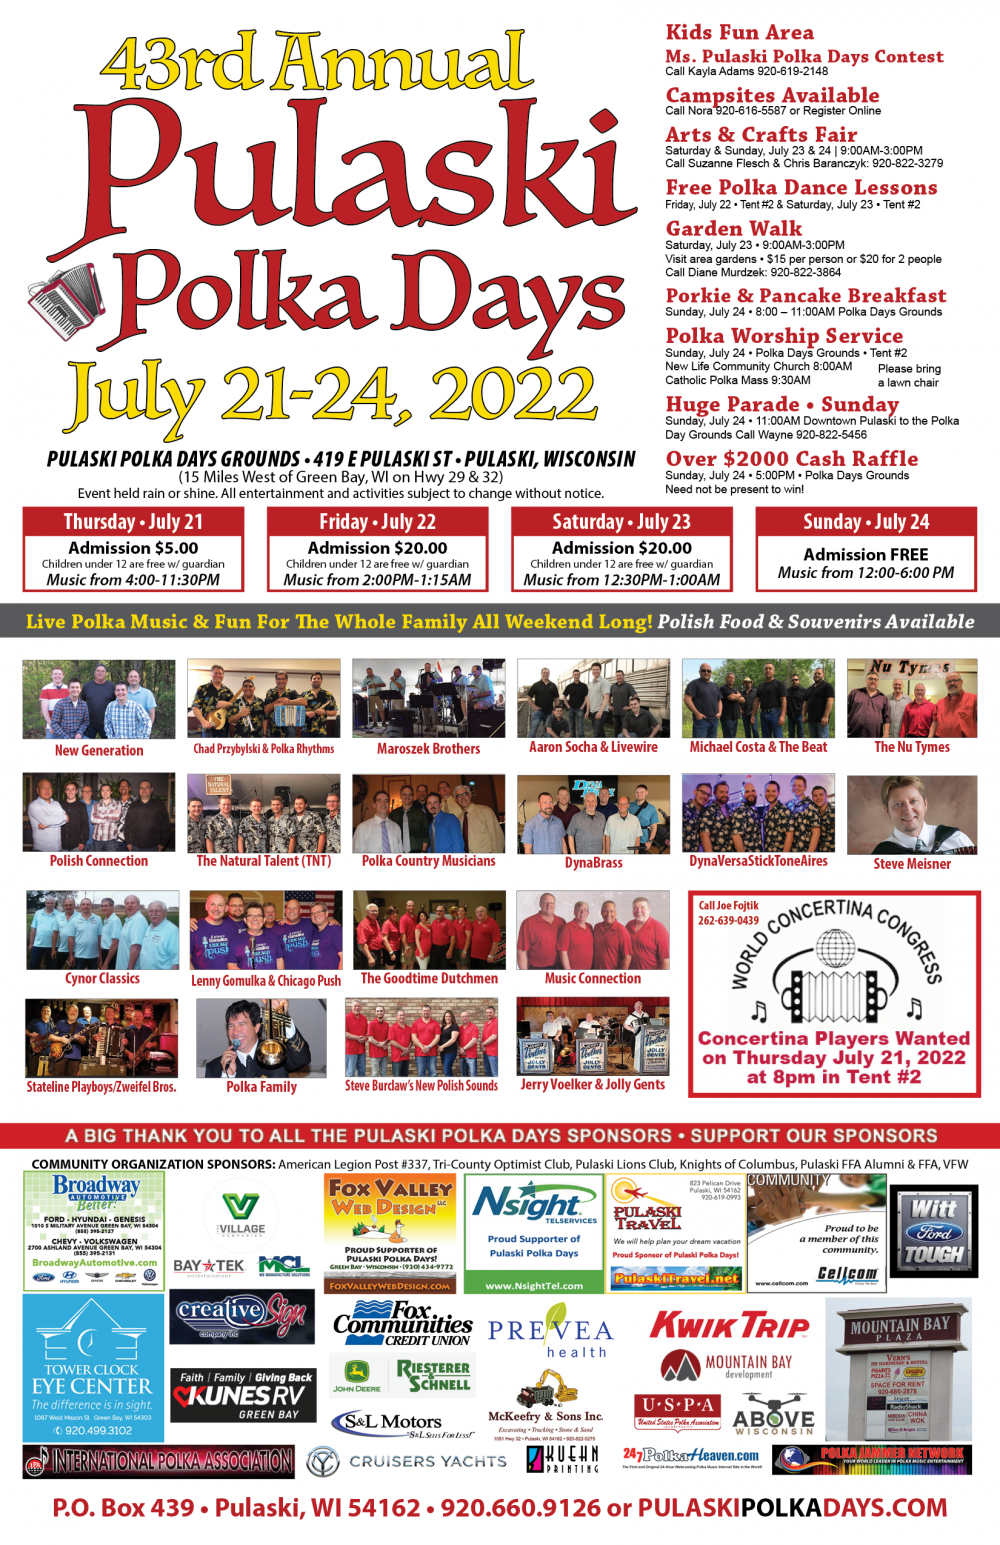 Pulaski Polka Days, July 21-24, 2022 in Pulaski, Wisconsin